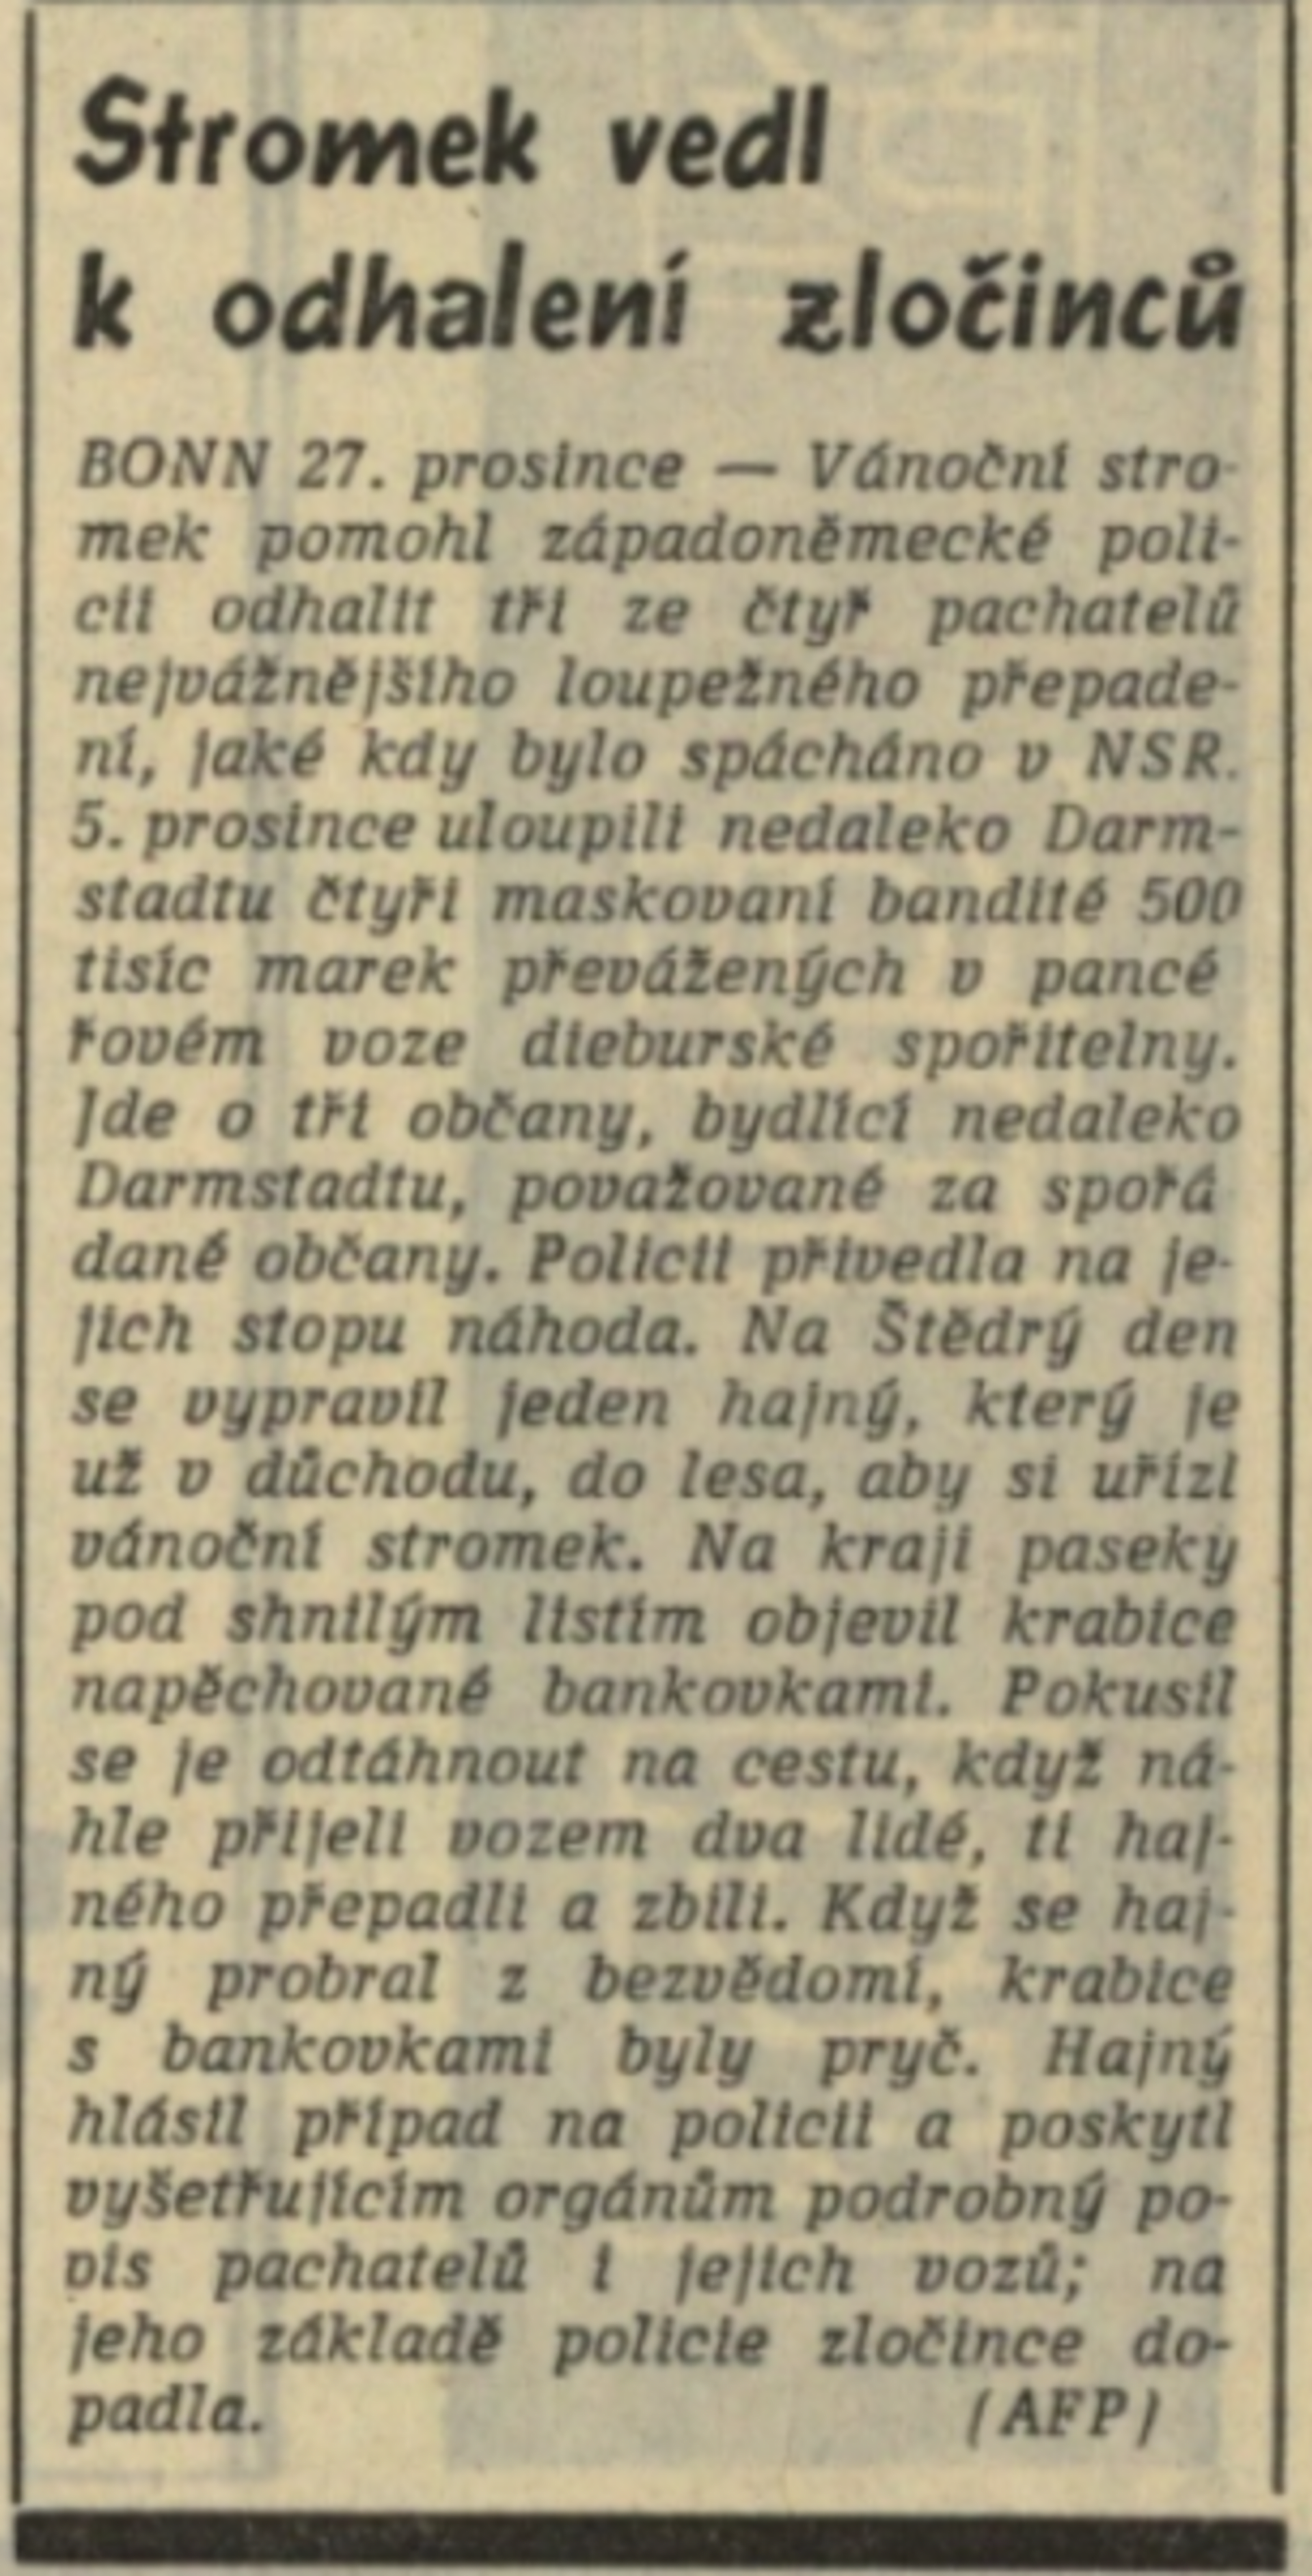 Jak se kradlo v Německu. Rudé právo, 1969. Zdroj Kramerius, Národní knihovna v Praze.